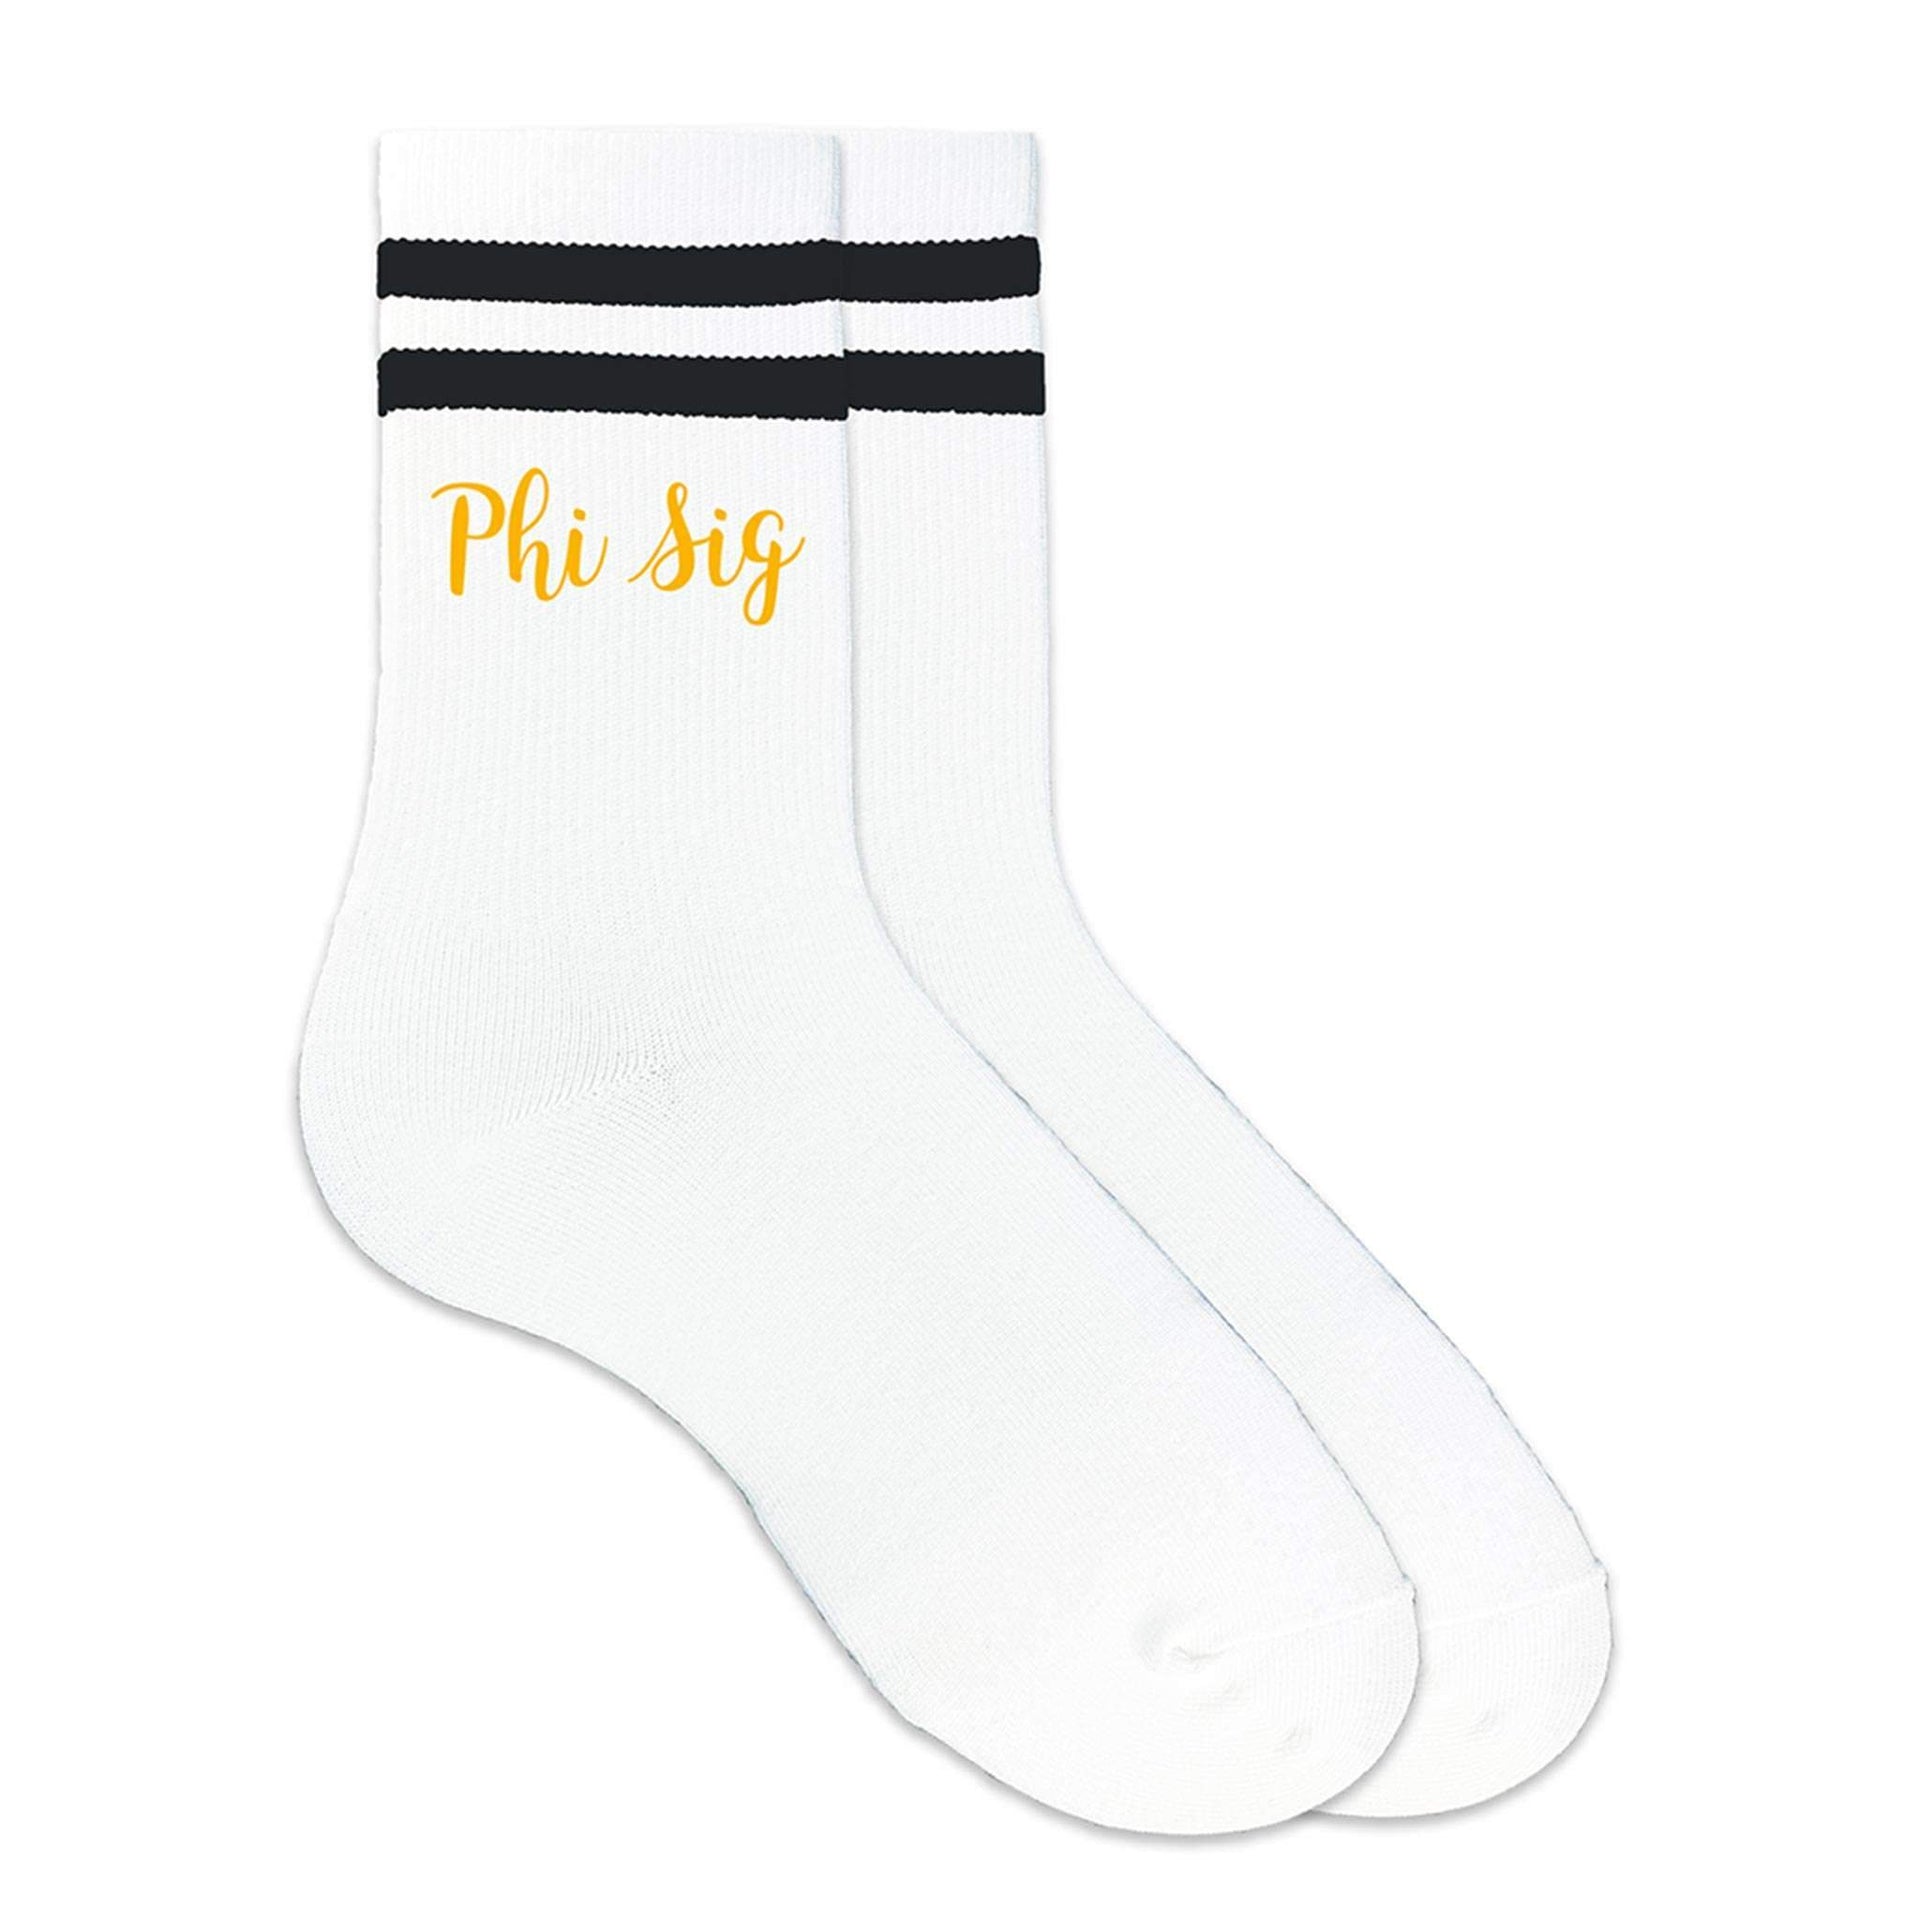 Phi Sig sorority nickname custom printed on striped crew socks